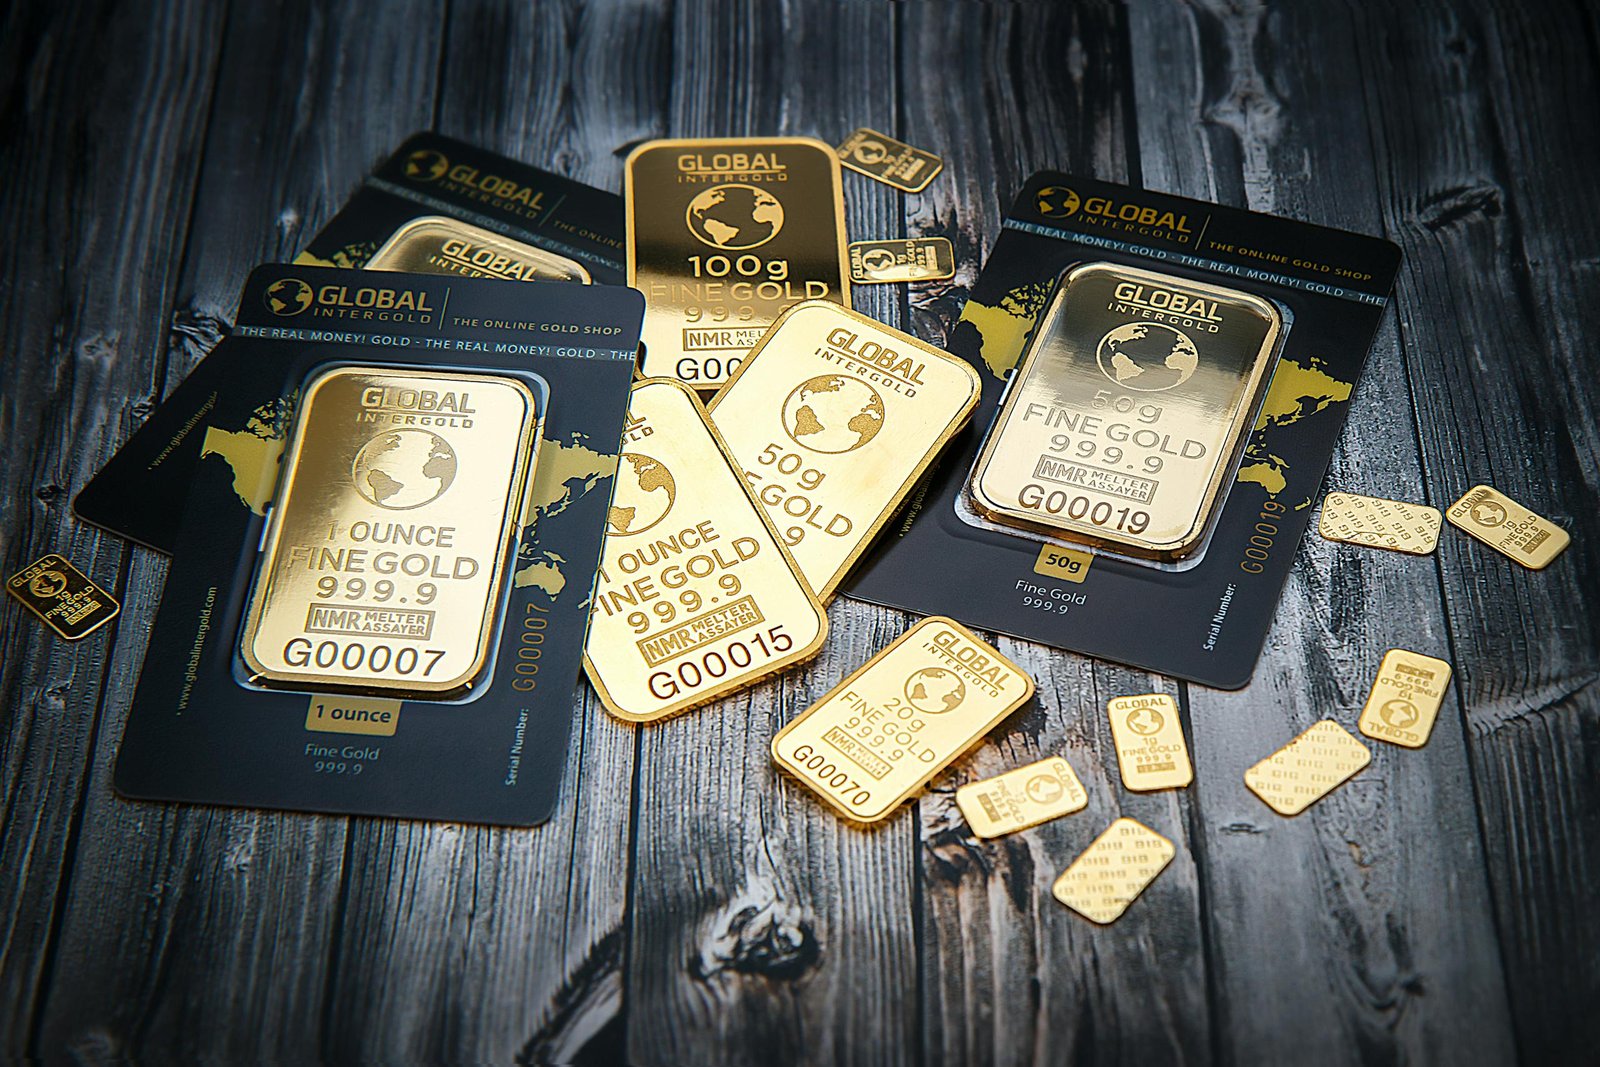 sovereign gold bond, SGB, gold investment, government bond, interest on gold